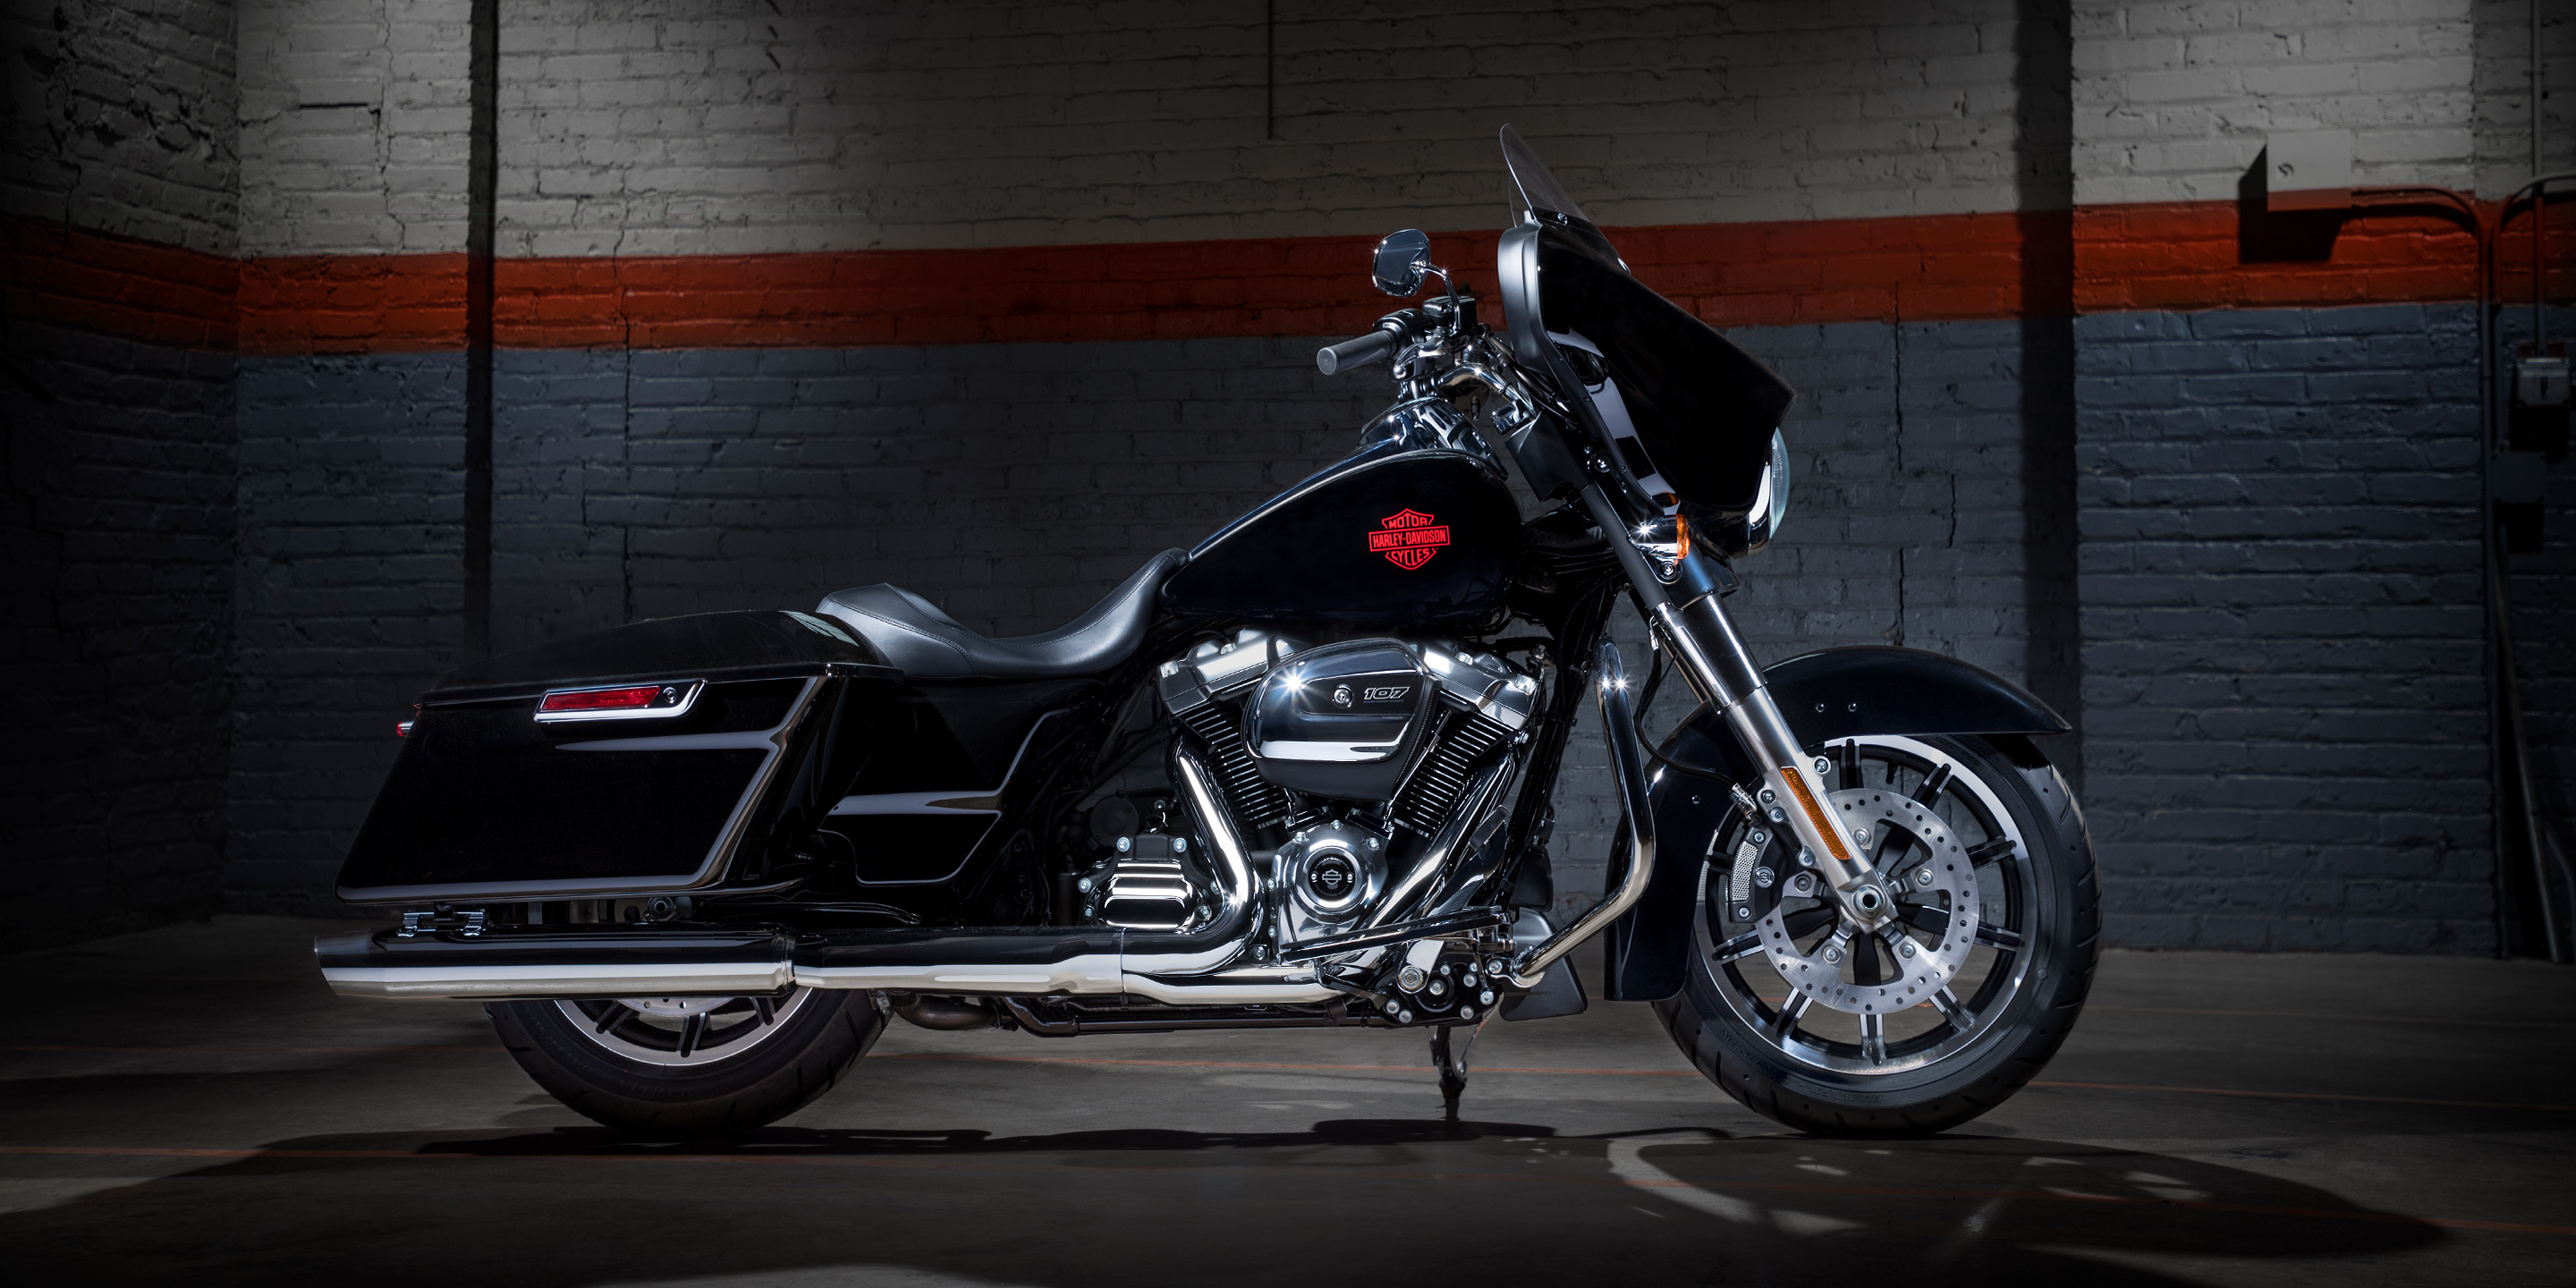  2019 Electra Glide Standard Motorcycle Harley Davidson USA